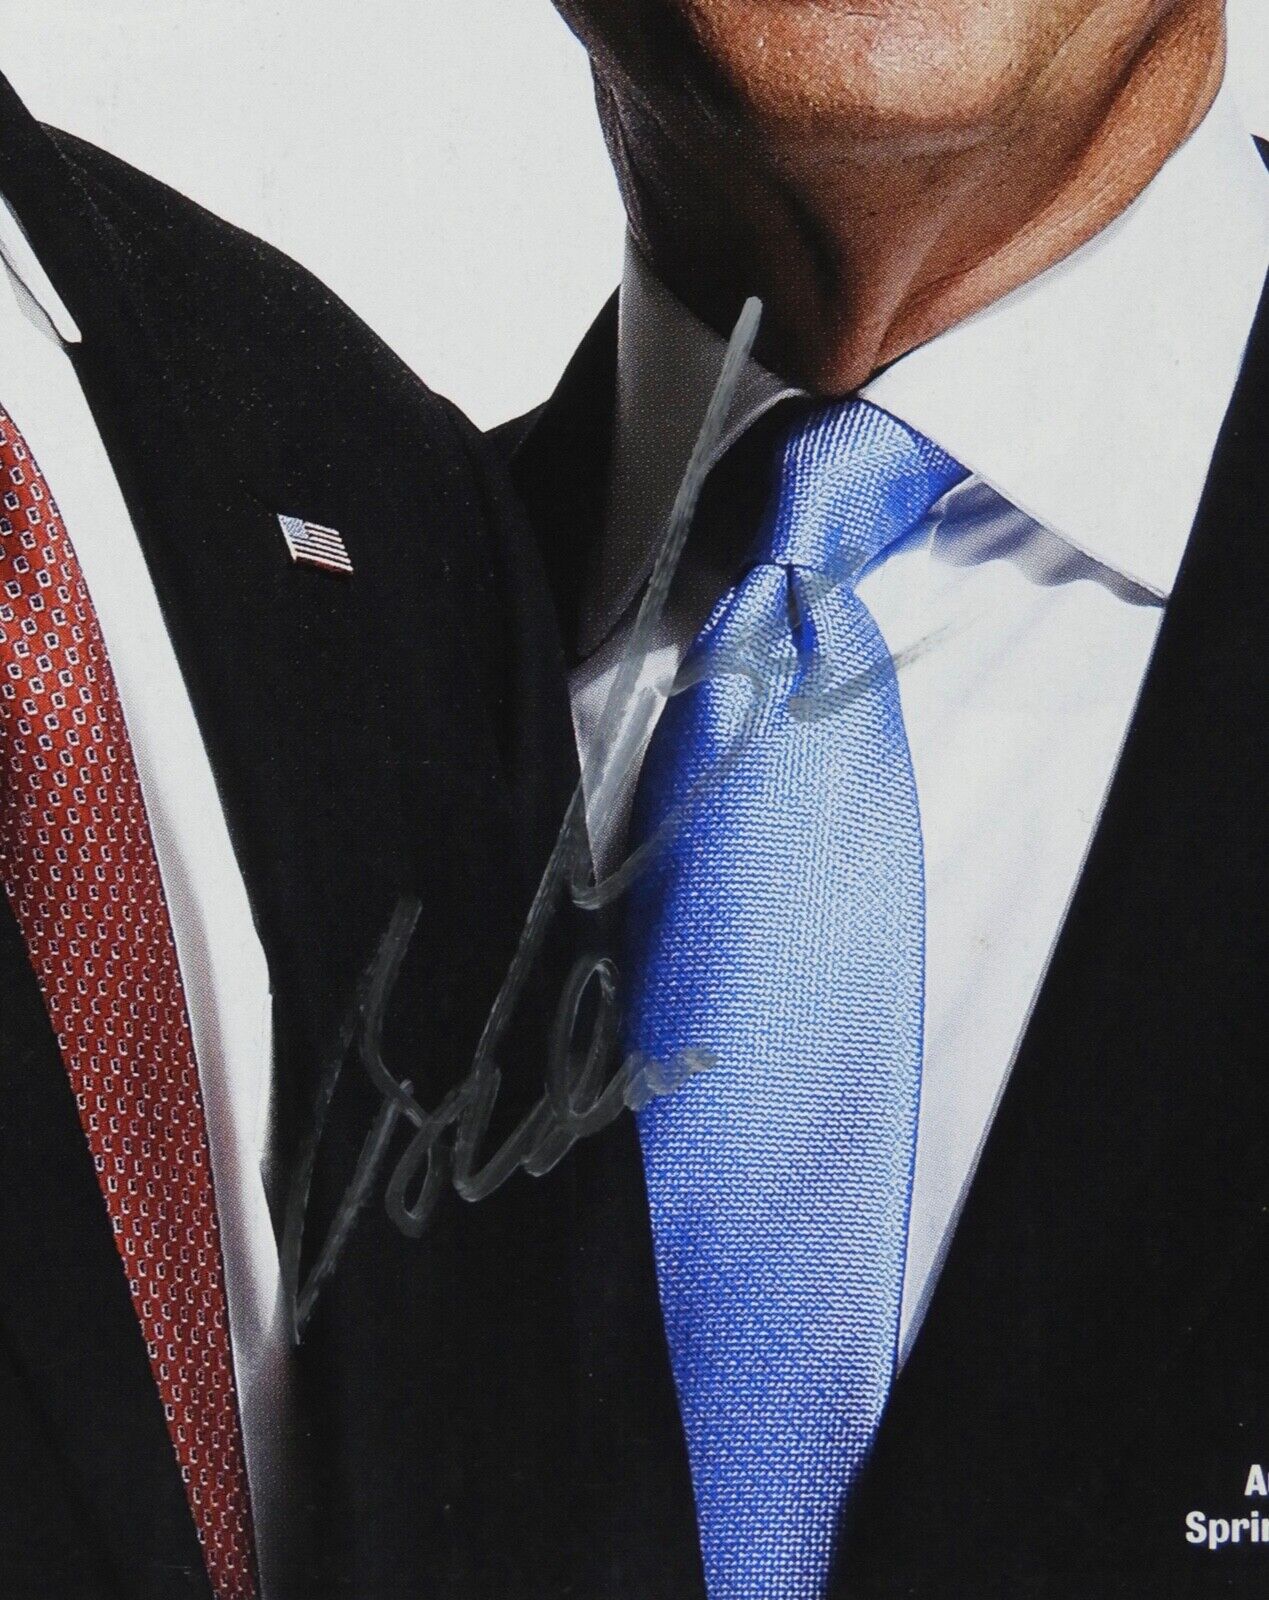 PSA JSA President Barack Obama & Joe Biden Dual Autograph Signed Magazine